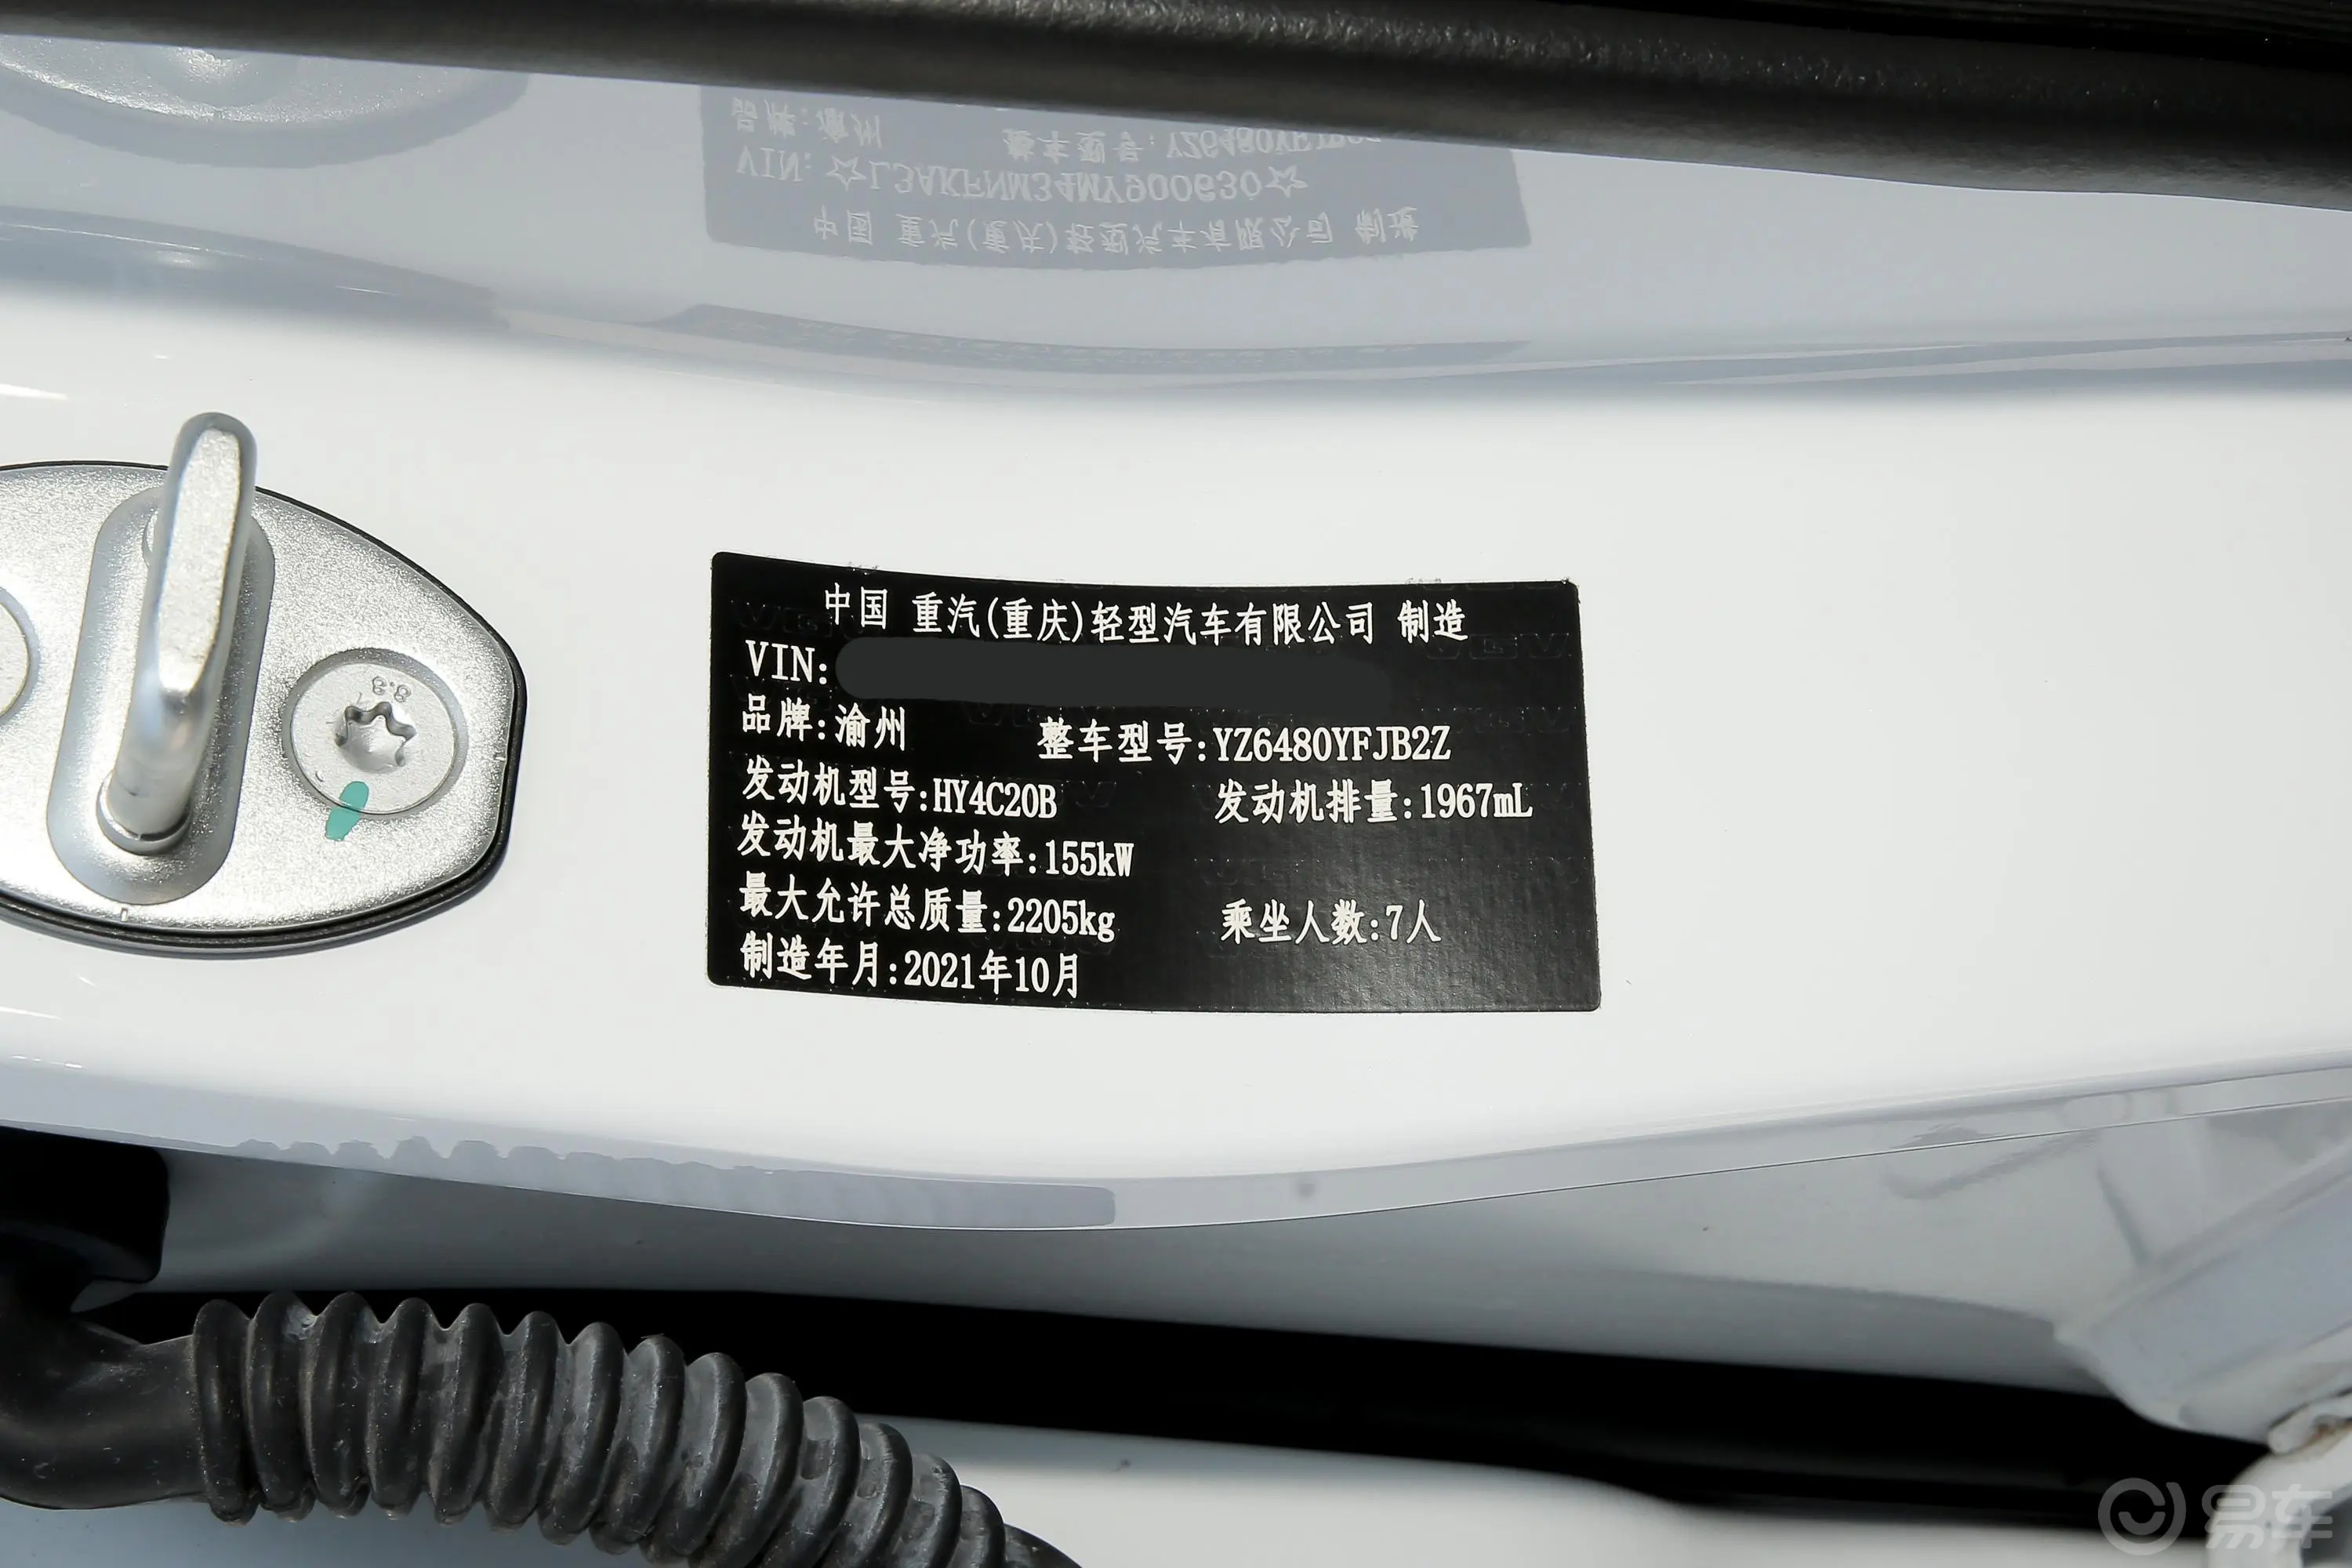 VGV U75 PLUS2.0T 梦幻旅行版 7座车辆信息铭牌